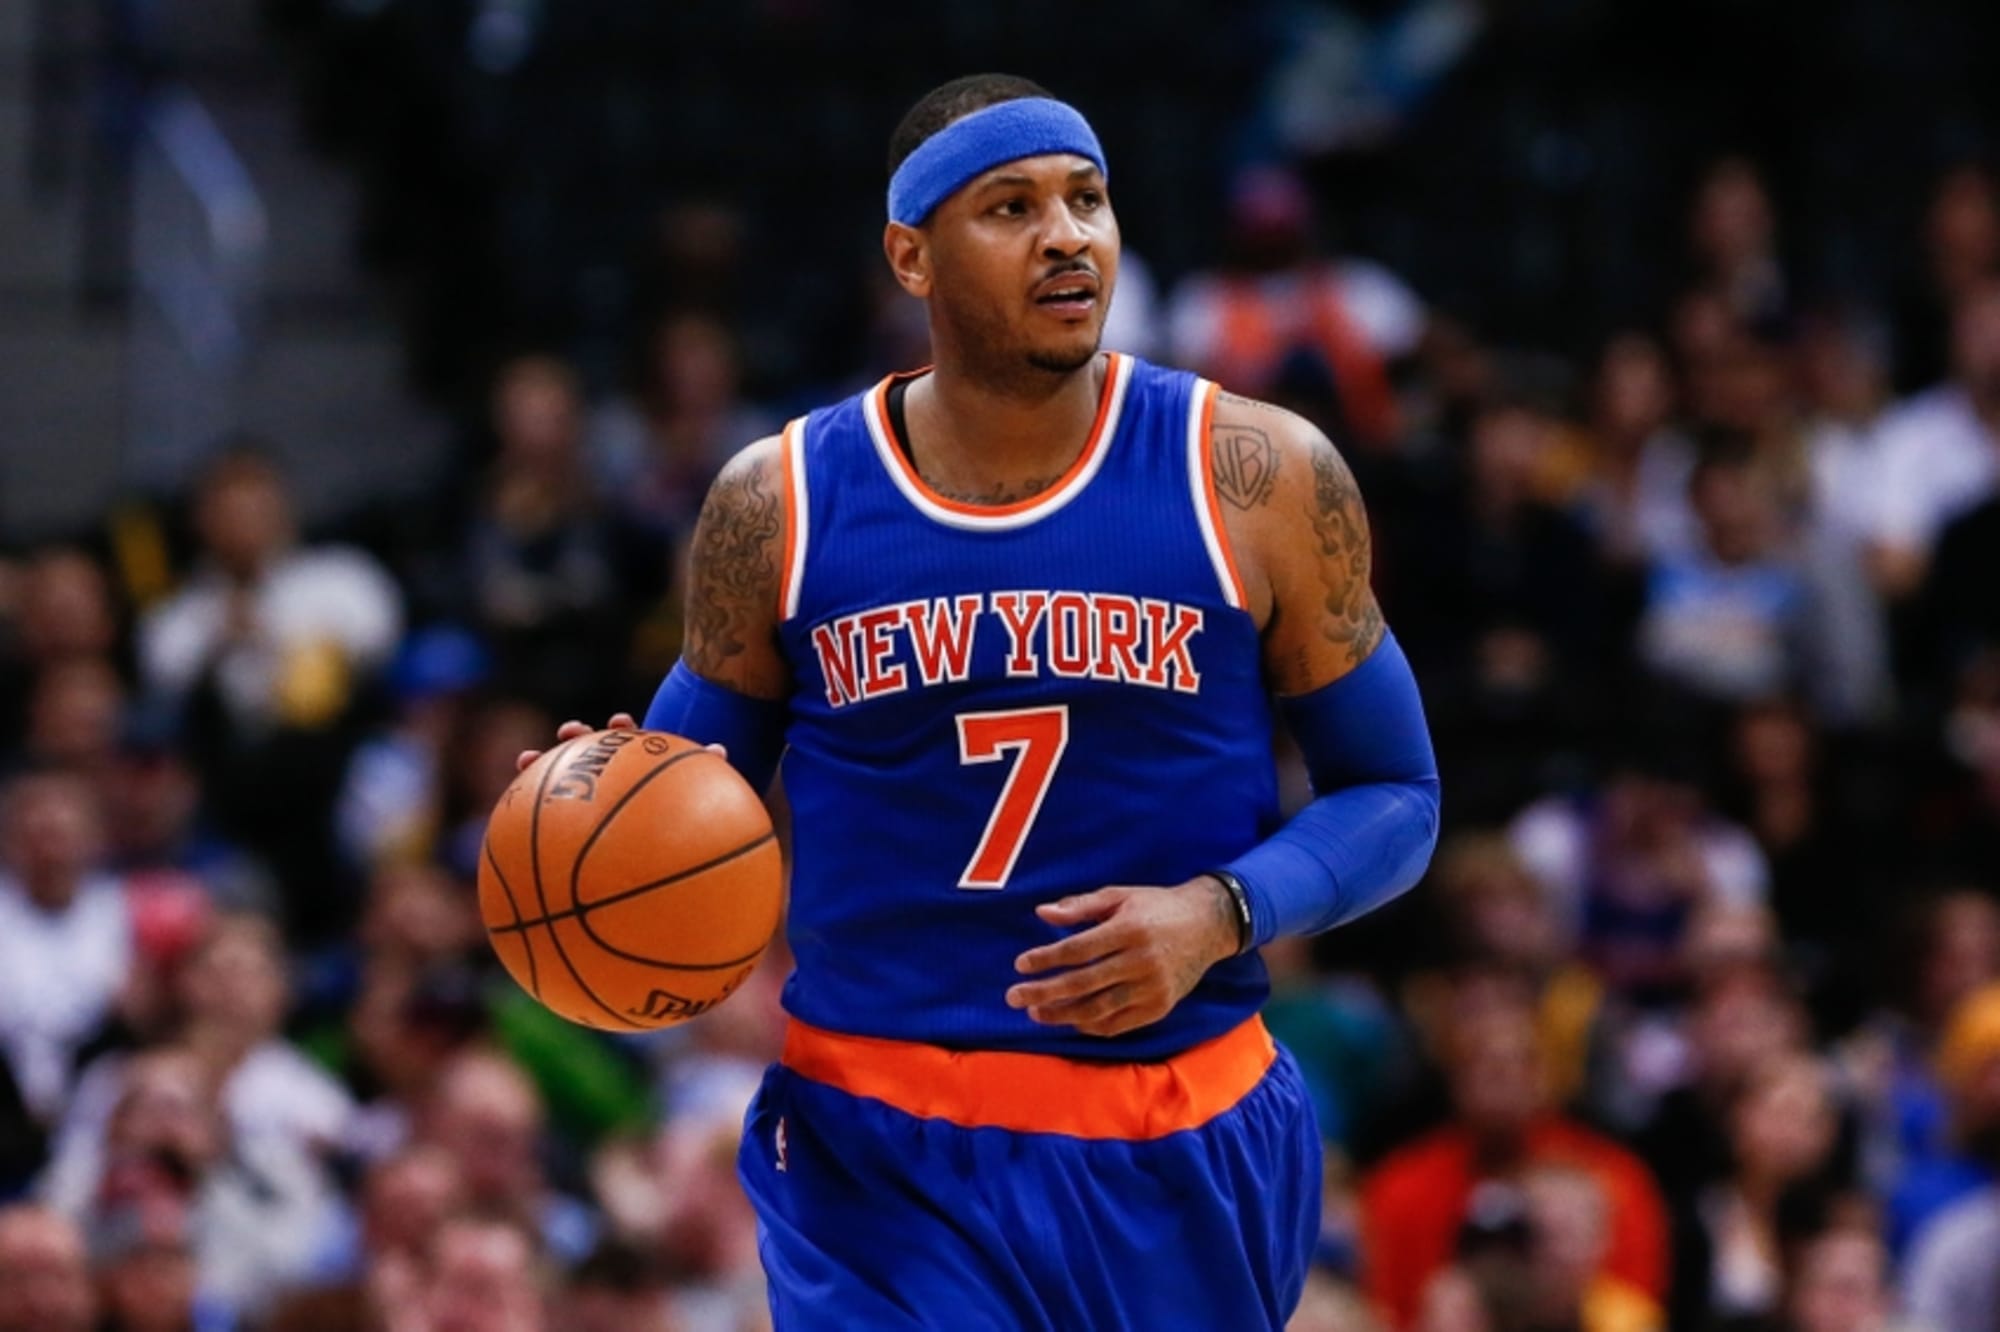 NBA New York Knicks